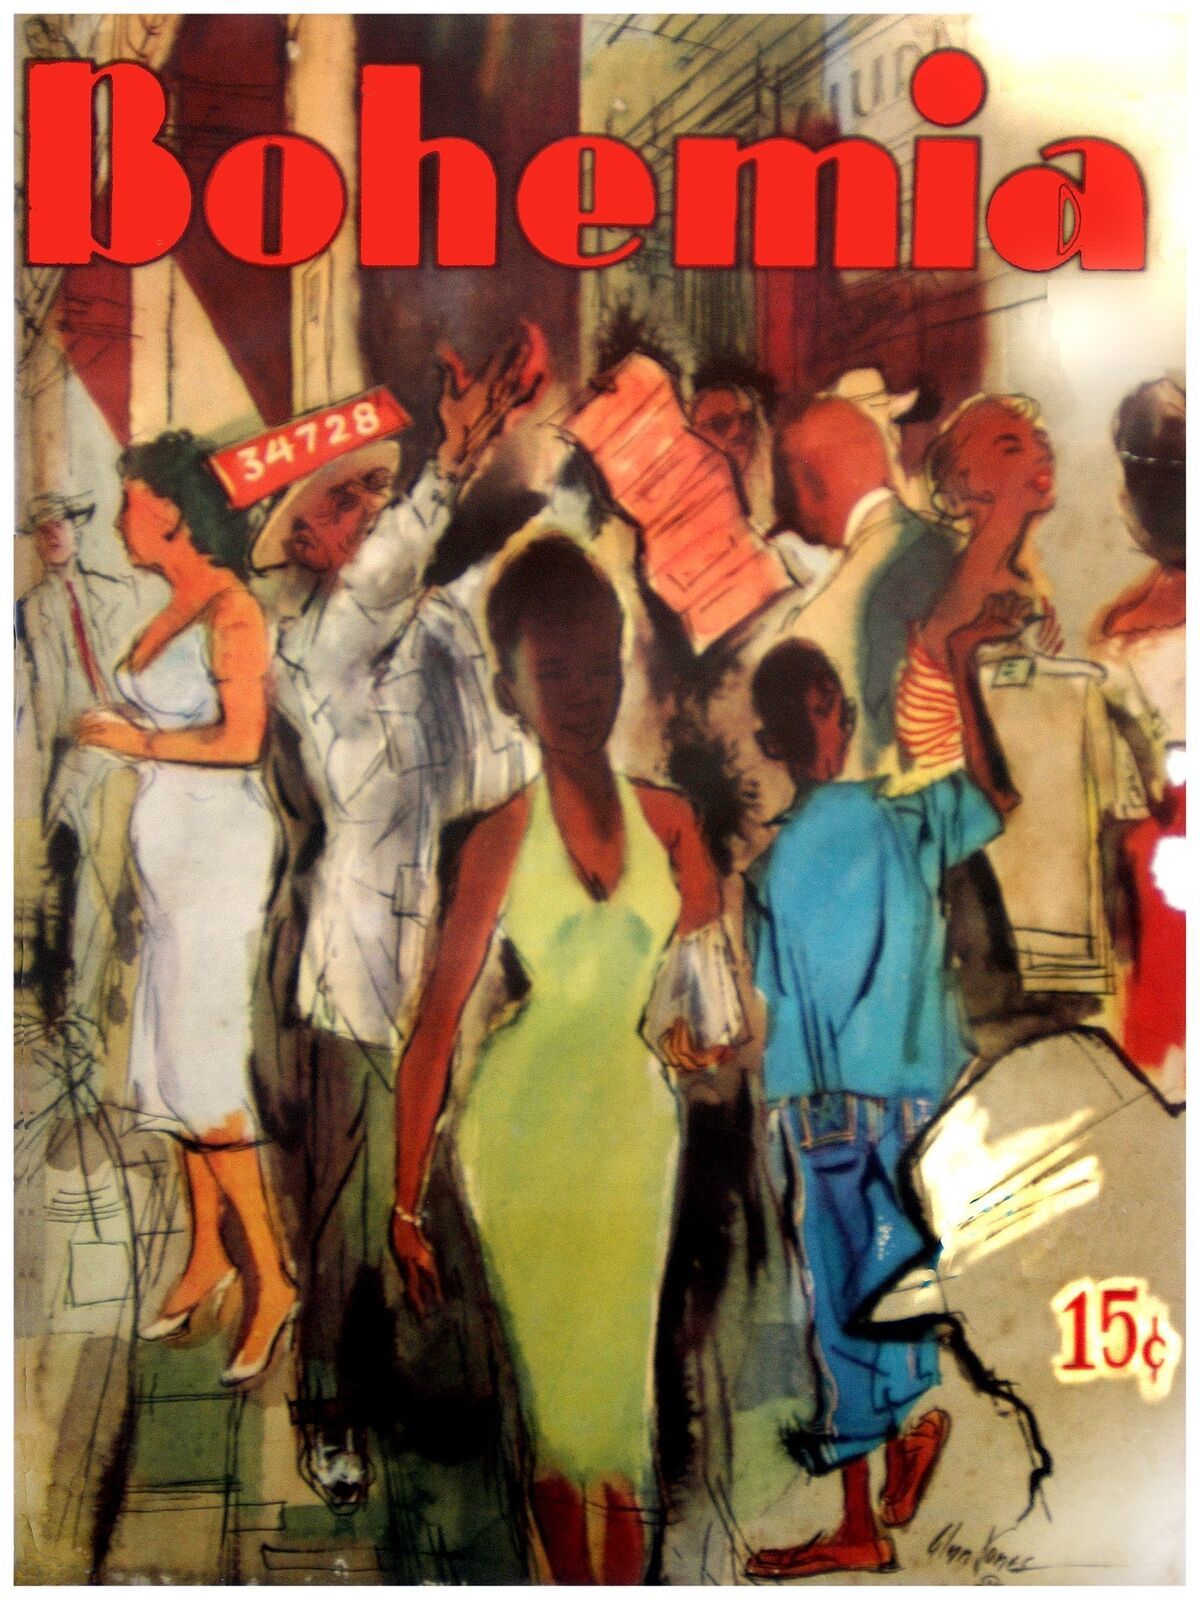 400.Cuban Poster"City Festivity Havana life Bohemia .Unique Interior Design - $16.20 - $54.00